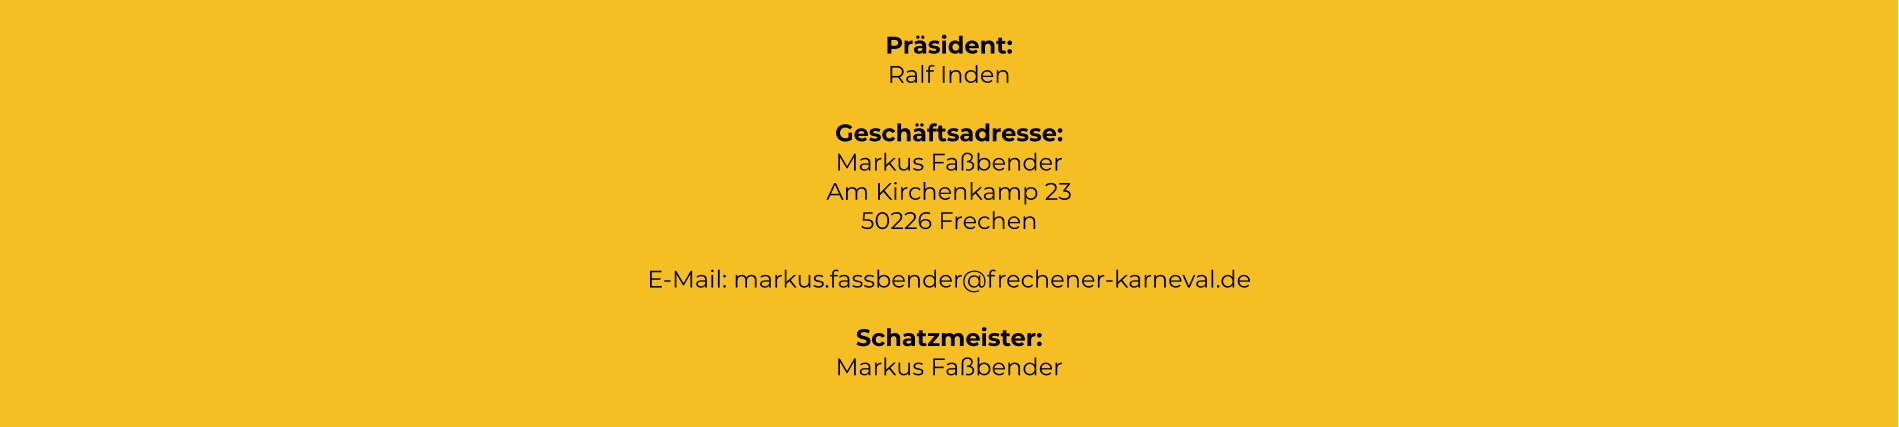 Präsident: Ralf Inden  Geschäftsadresse: Markus Faßbender Am Kirchenkamp 23 50226 Frechen  E-Mail: markus.fassbender@frechener-karneval.de  Schatzmeister: Markus Faßbender